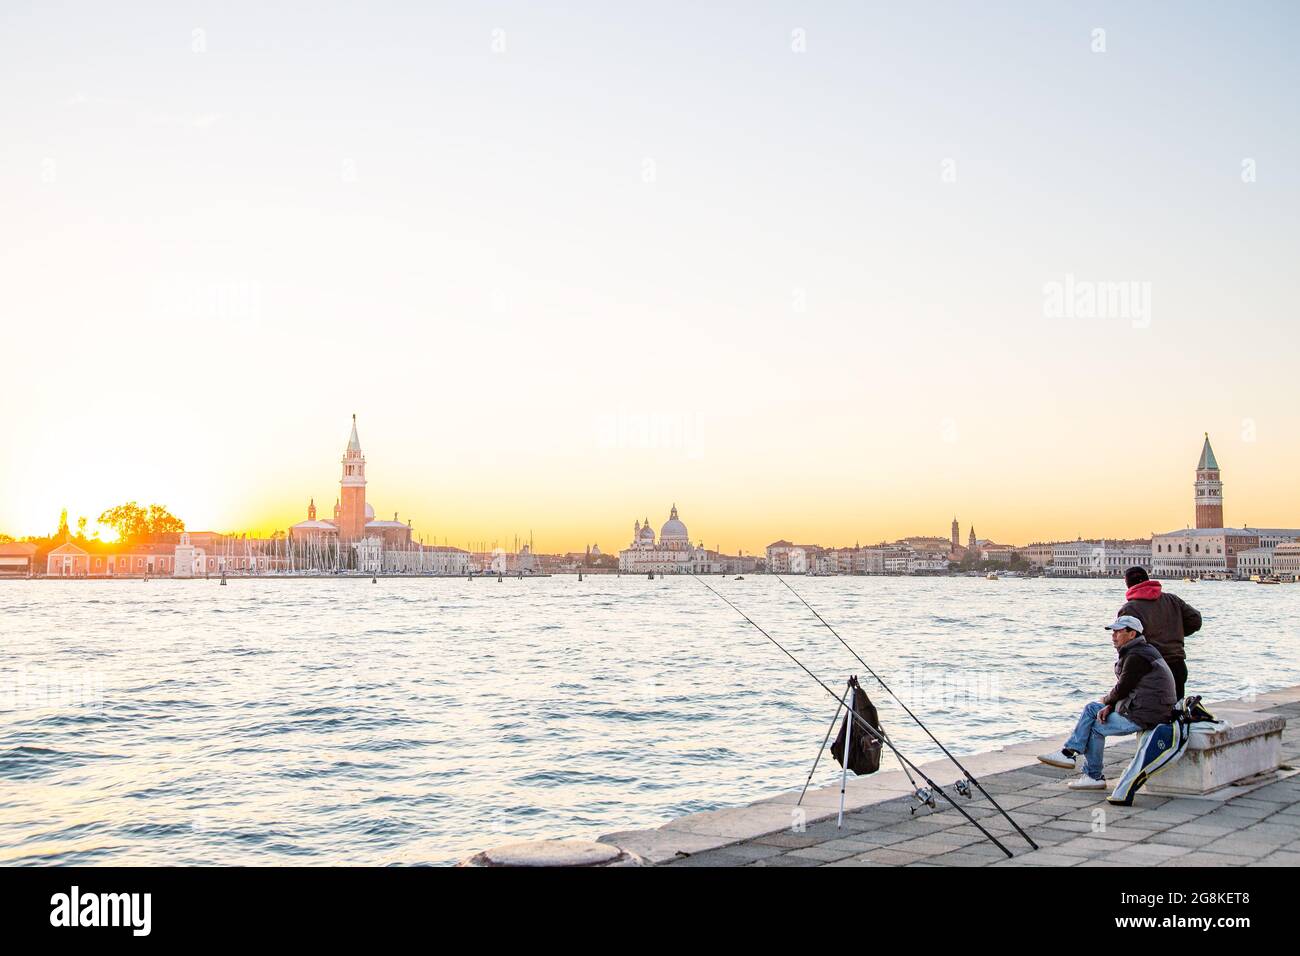 VENICE, ITALY - Jul 31, 2018: calm fisherman enjoying the sunset in Venice, Biennale di Venezia, panoramic view Stock Photo